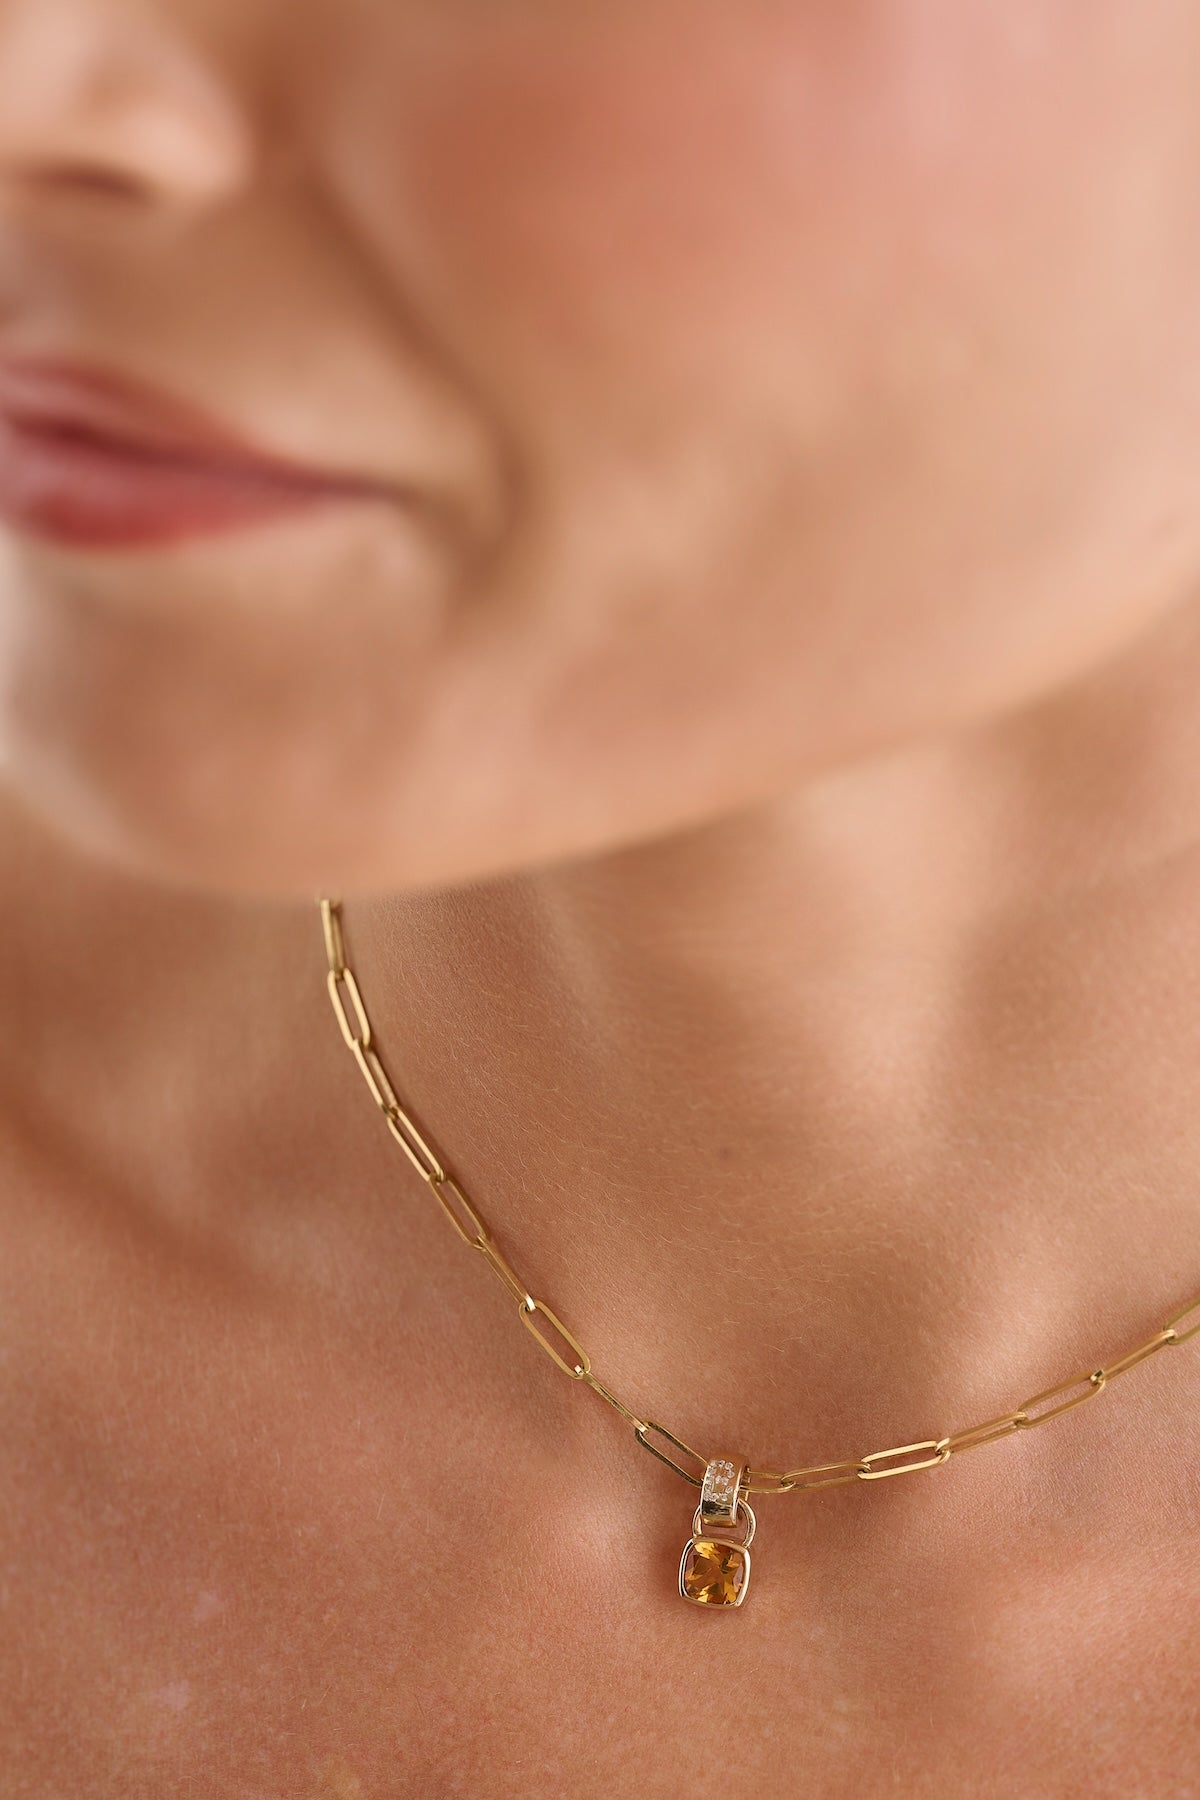 Bezel Birthstone Pendant Necklace